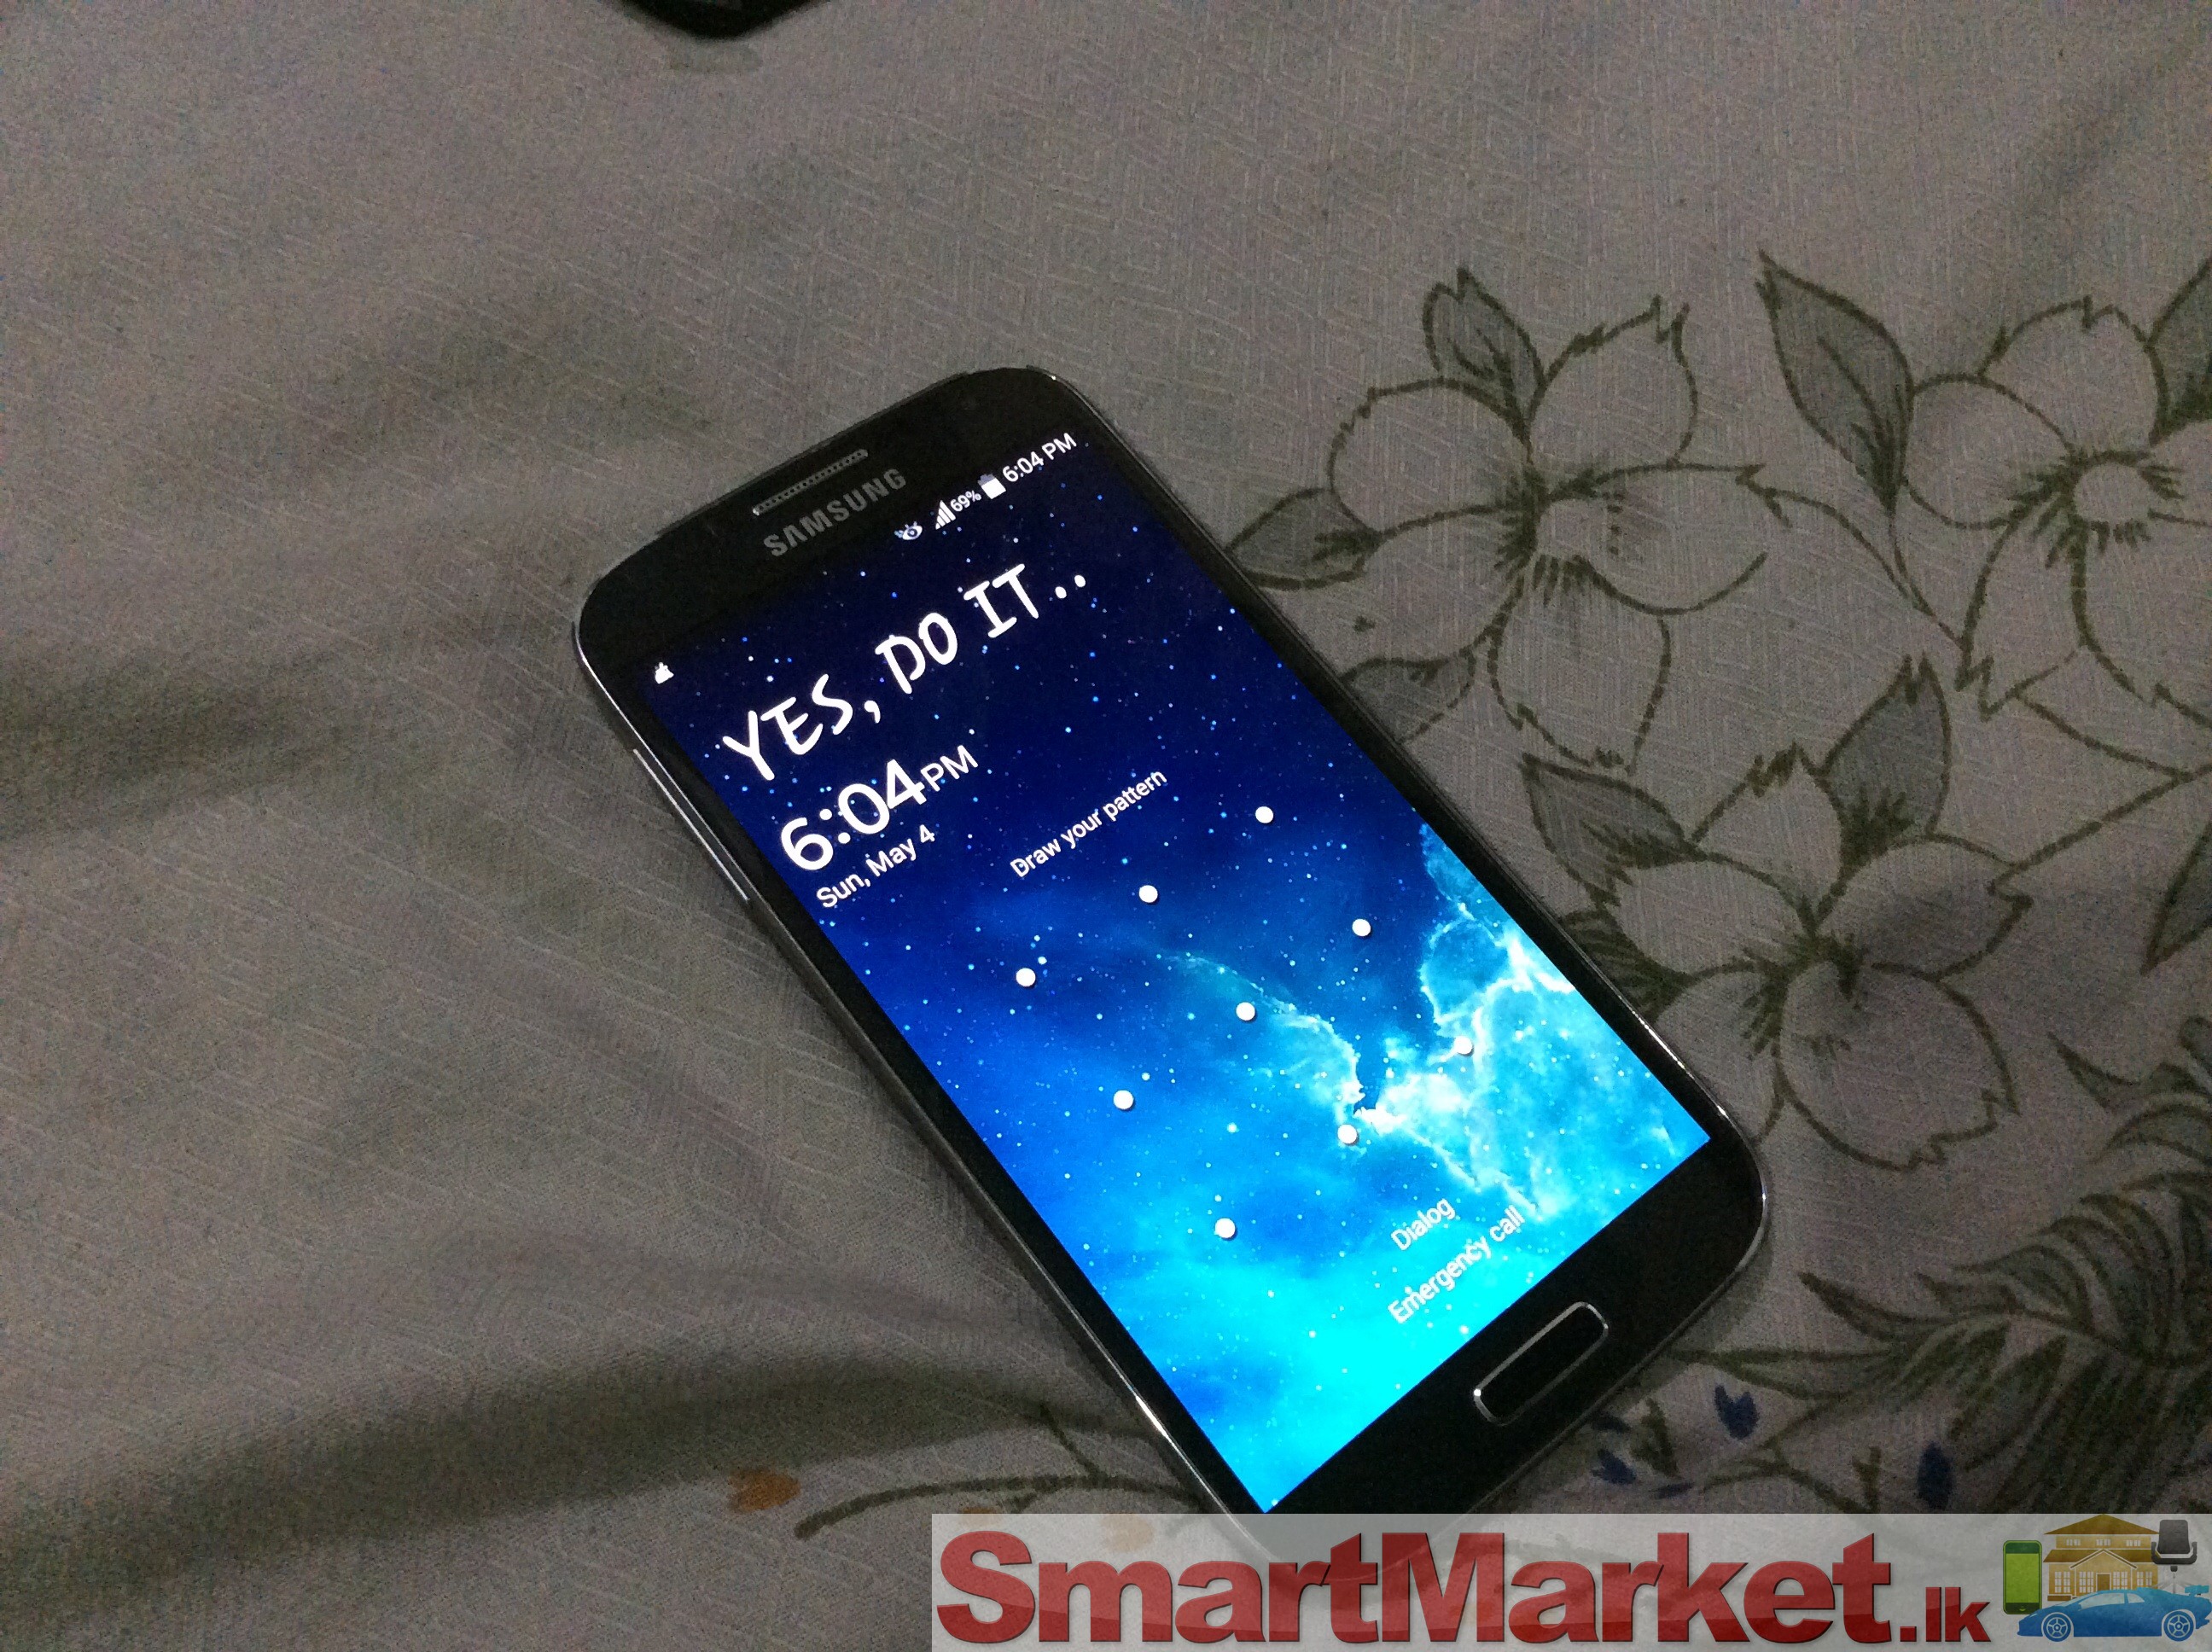 Samsung Galaxy S4 For Sale